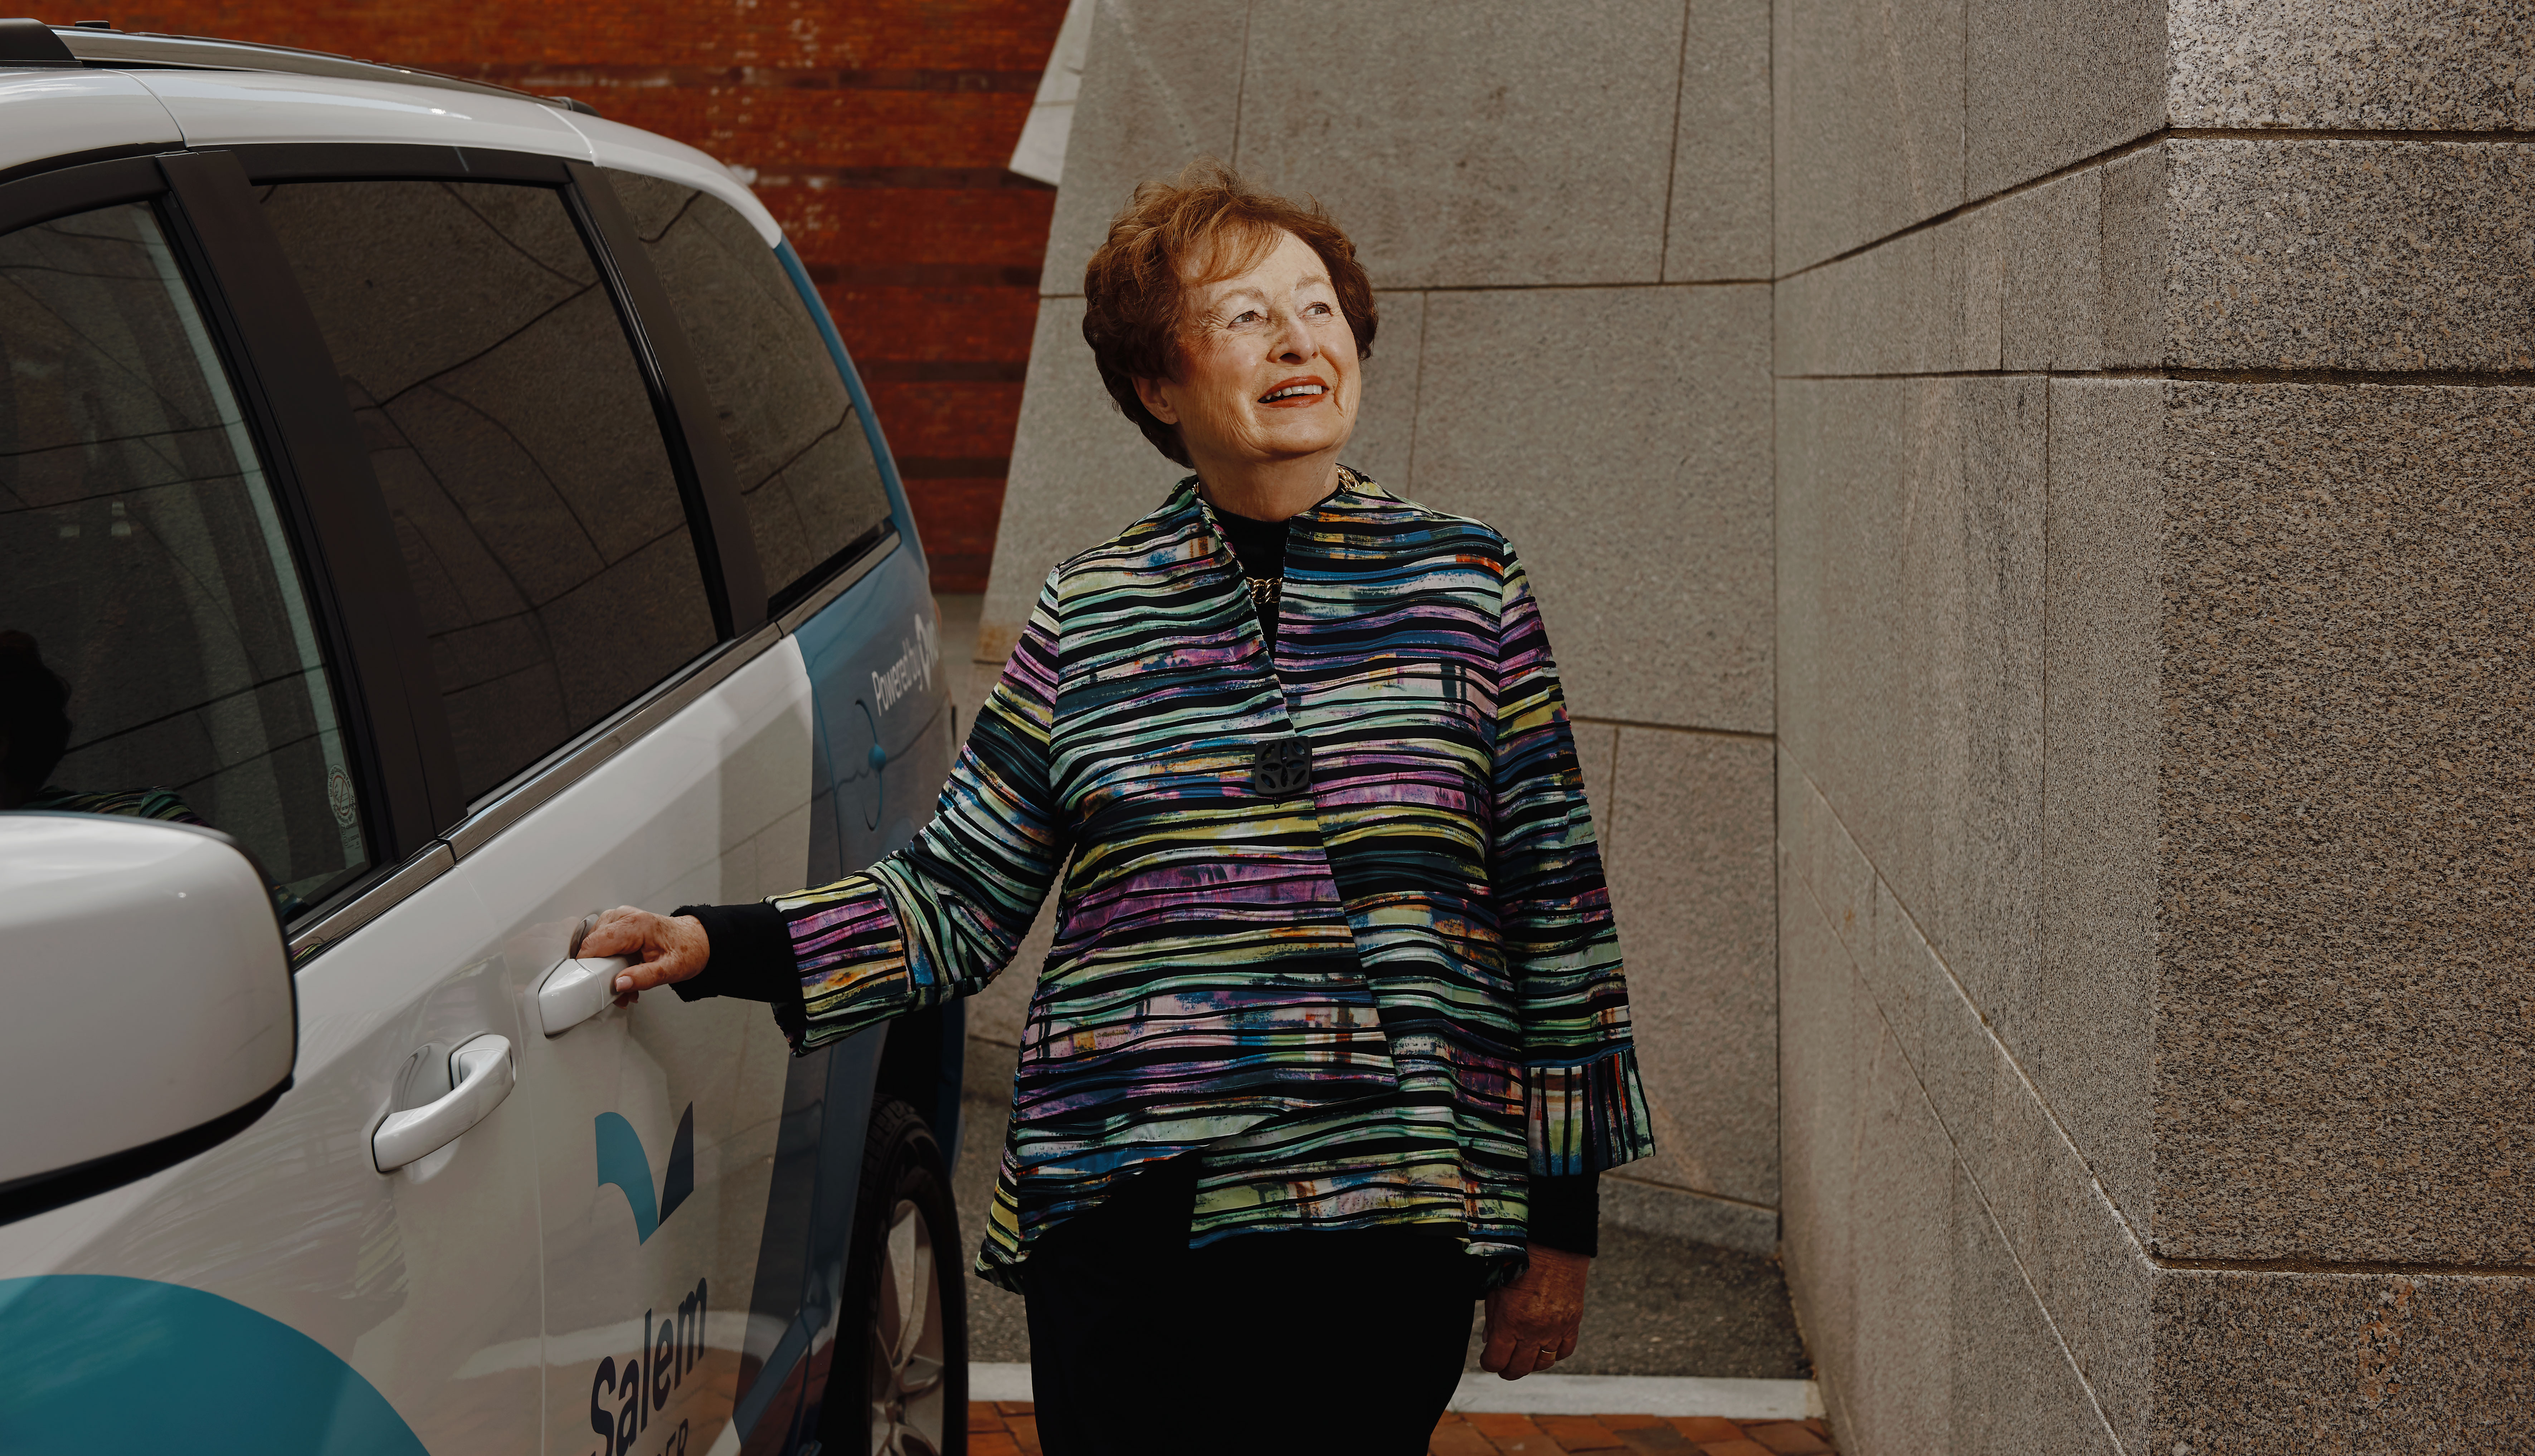 An older woman standing by a van